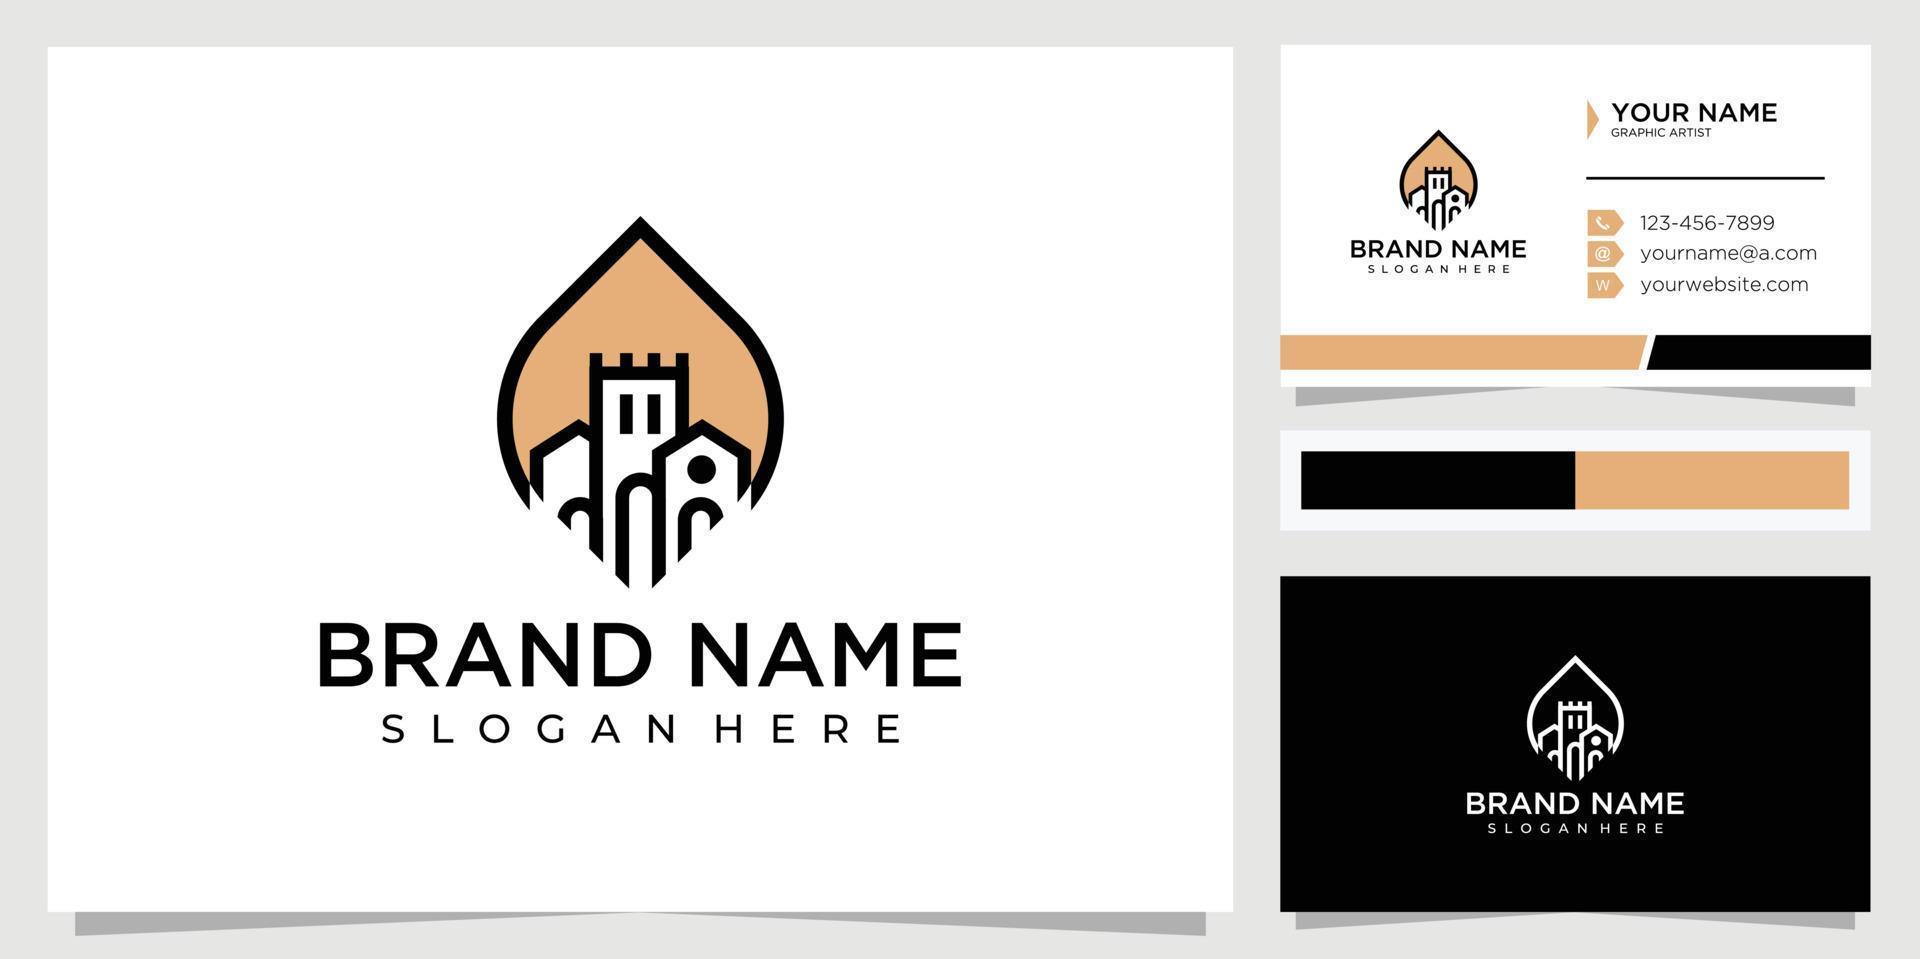 Creative castle logo design concept with business card vector